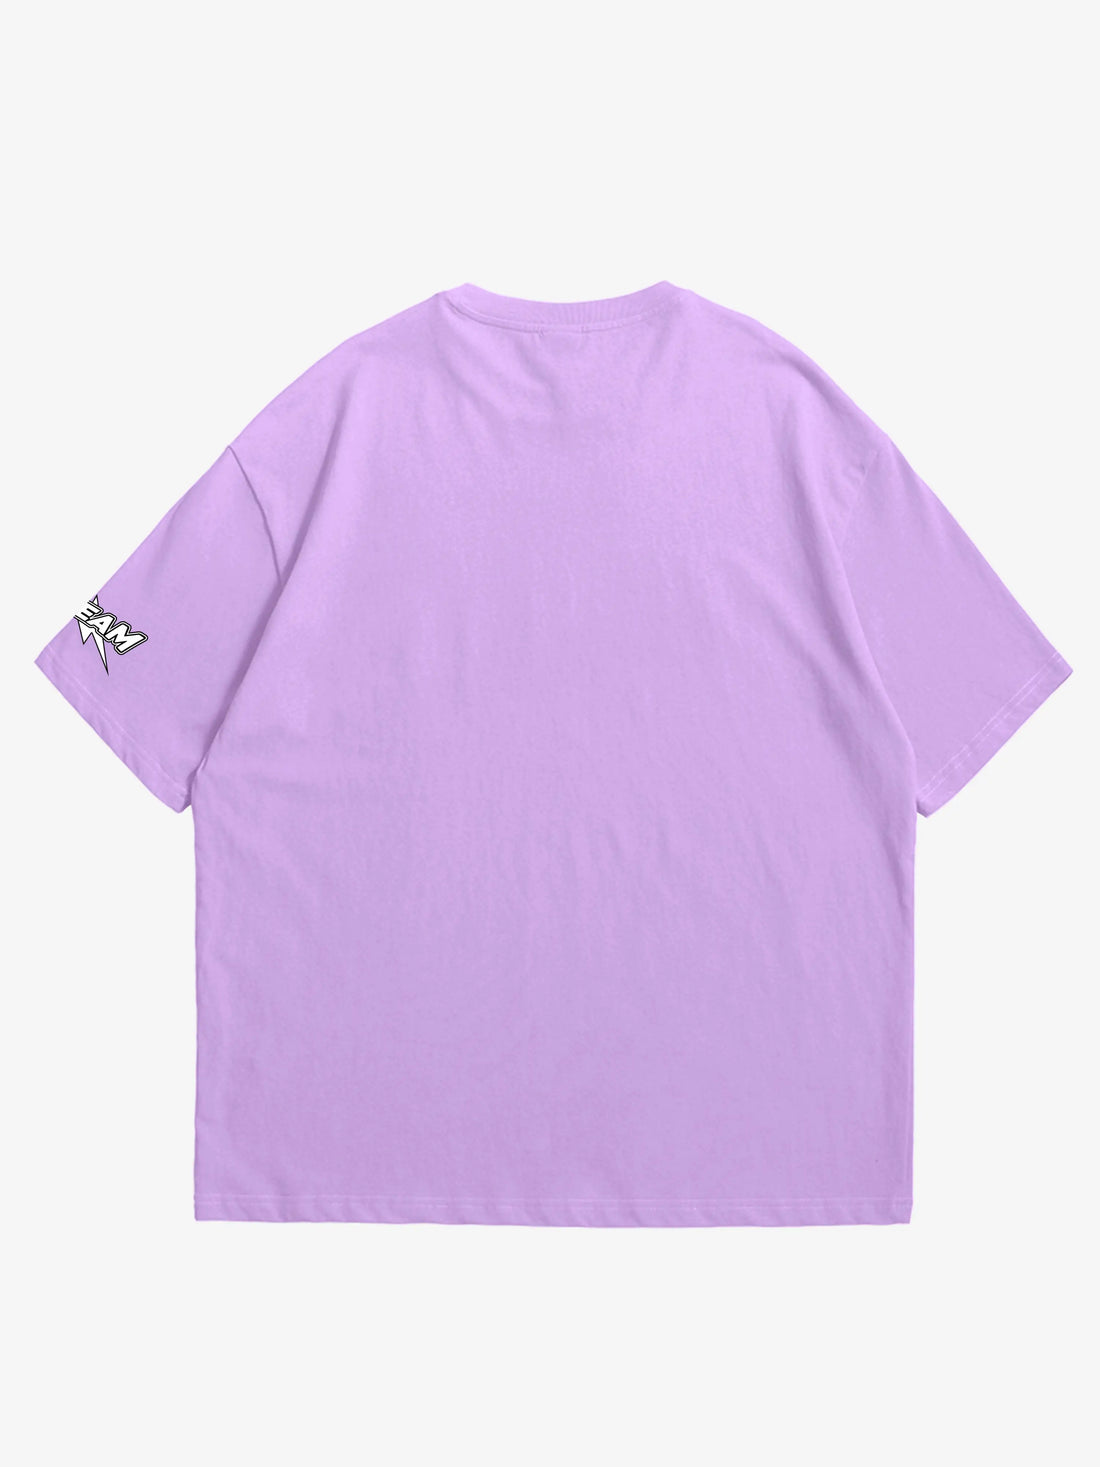 lavender oversized t-shirt, graphic y2k print, skream streetwear t-shirt